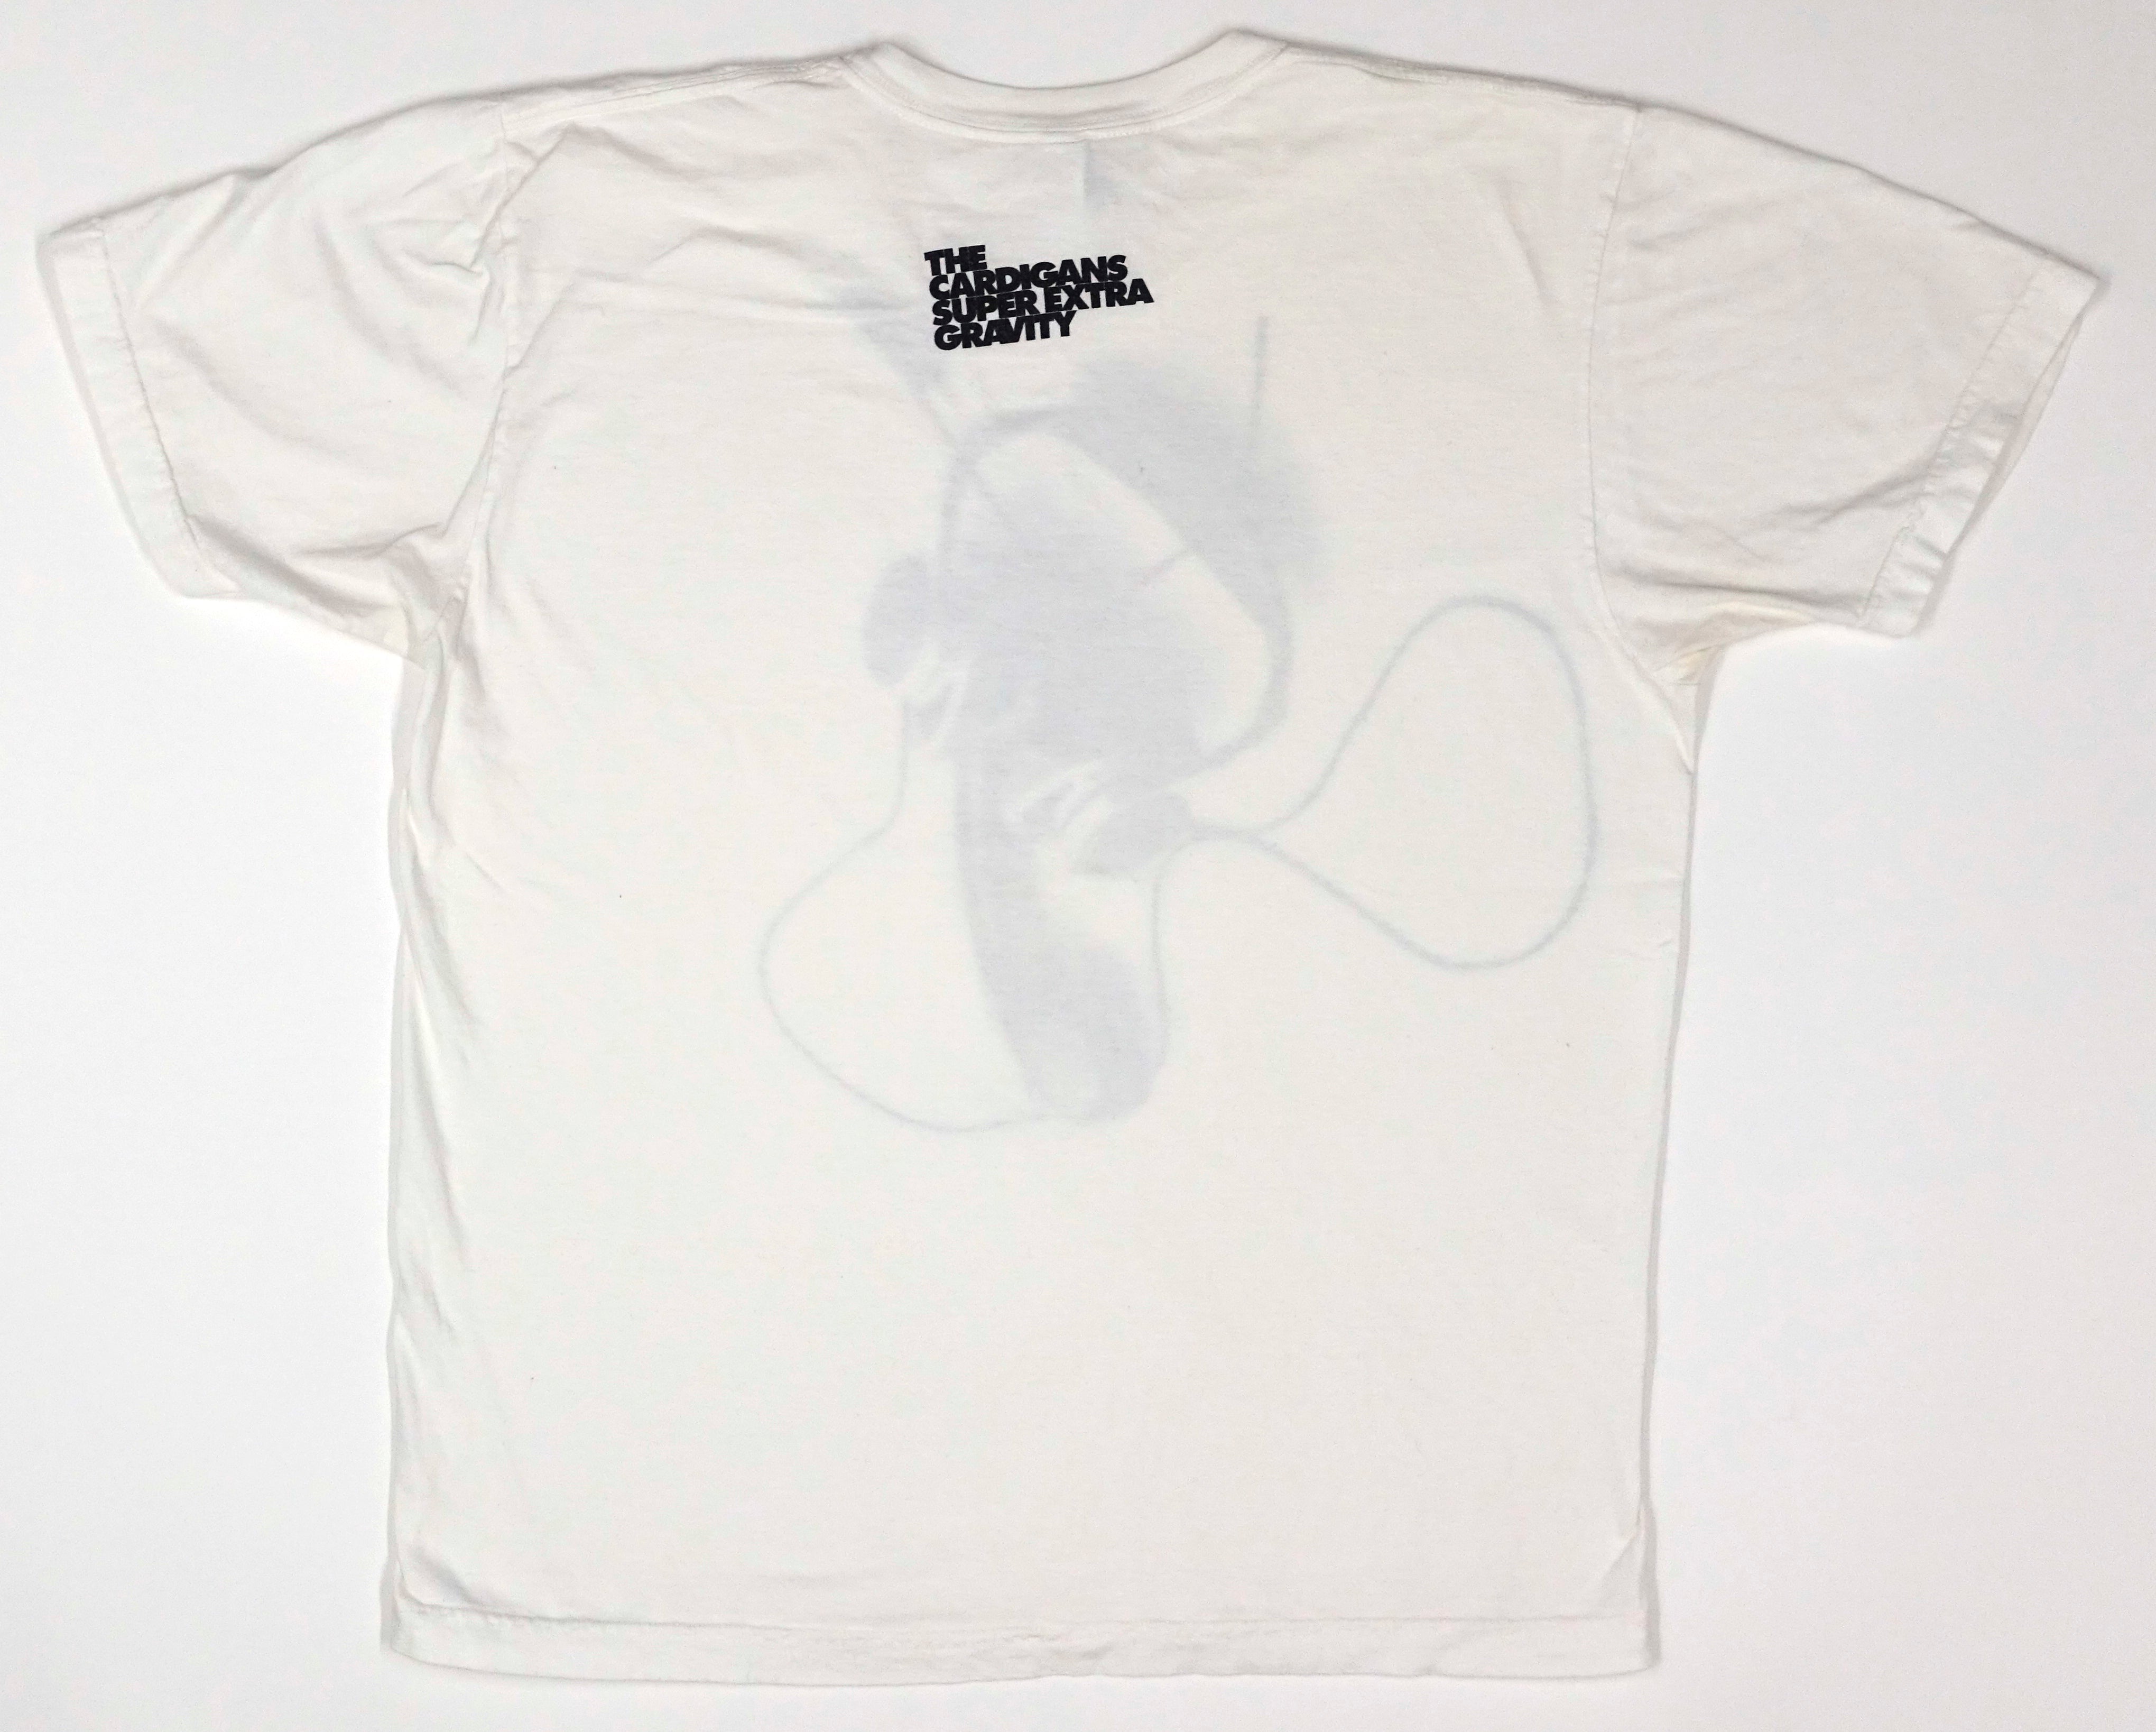 the Cardigans - Headphones Super Extra Gravity 2005 Tour Shirt Size Large